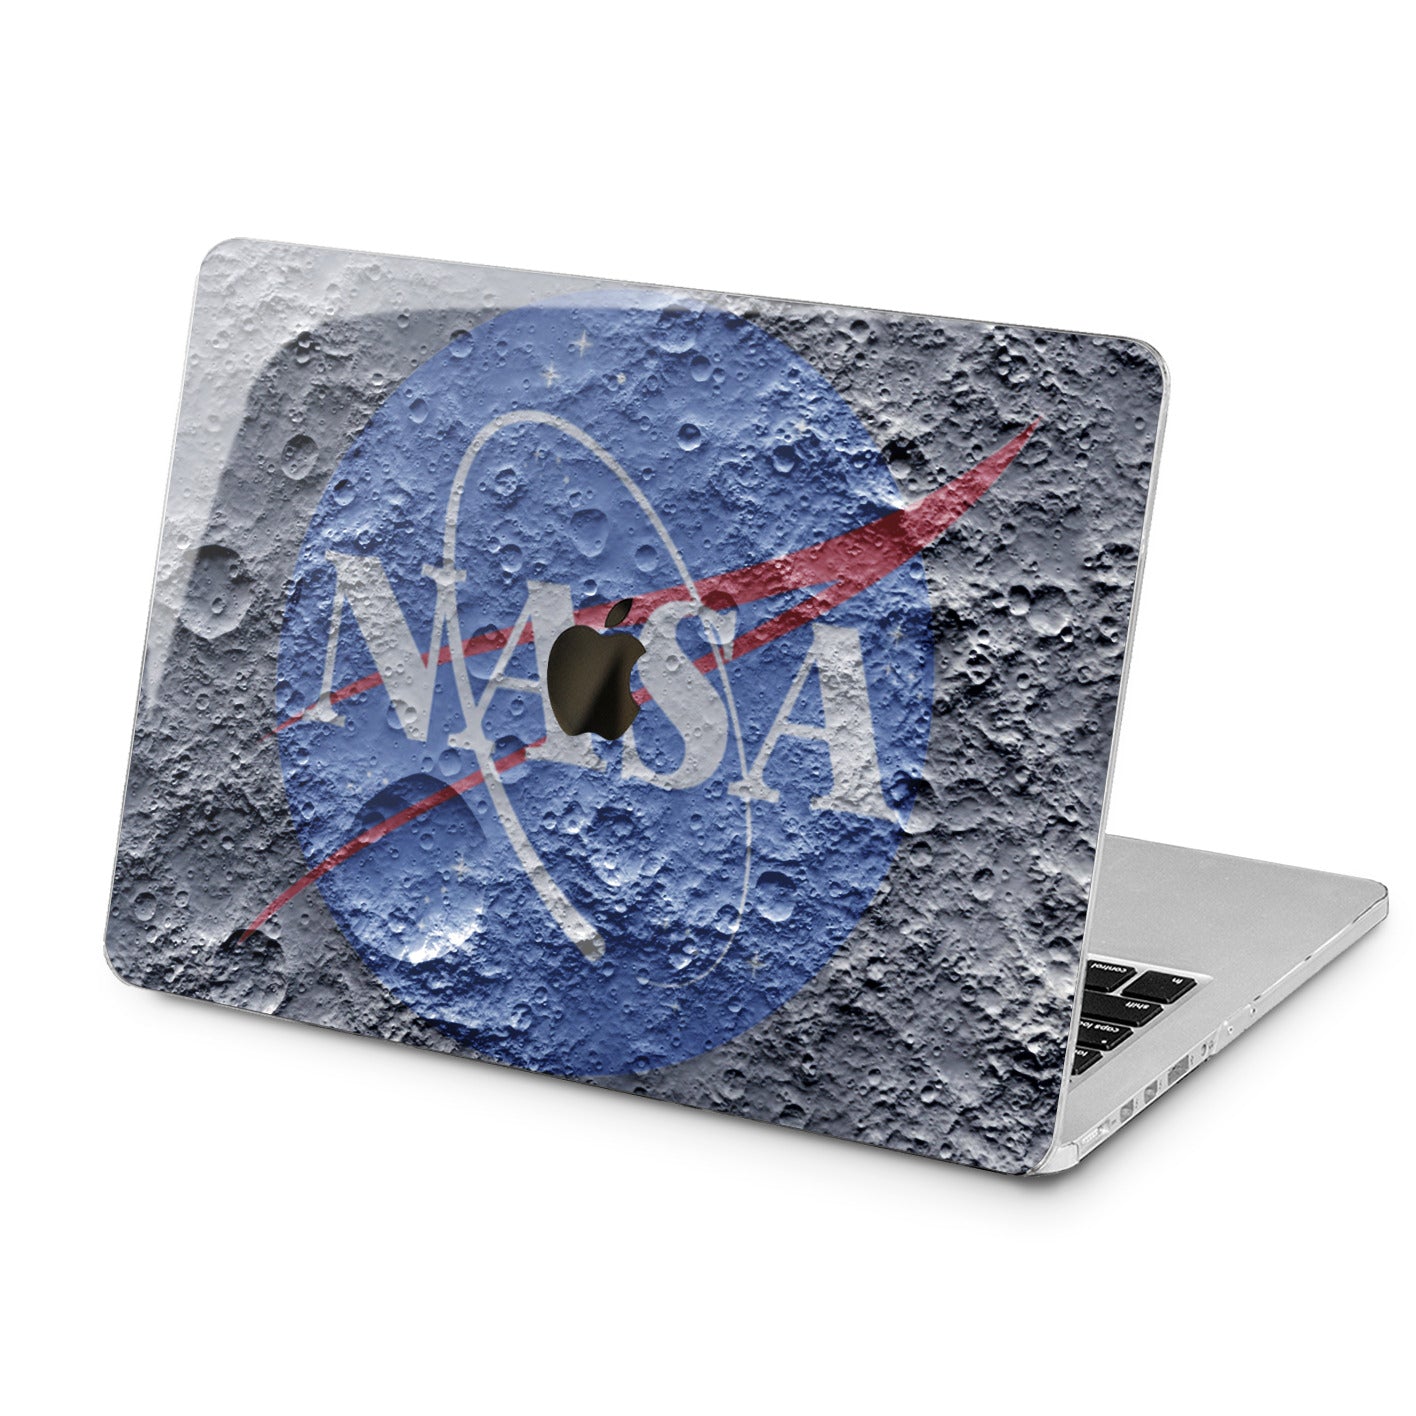 Lex Altern NASA Theme Case for your Laptop Apple Macbook.